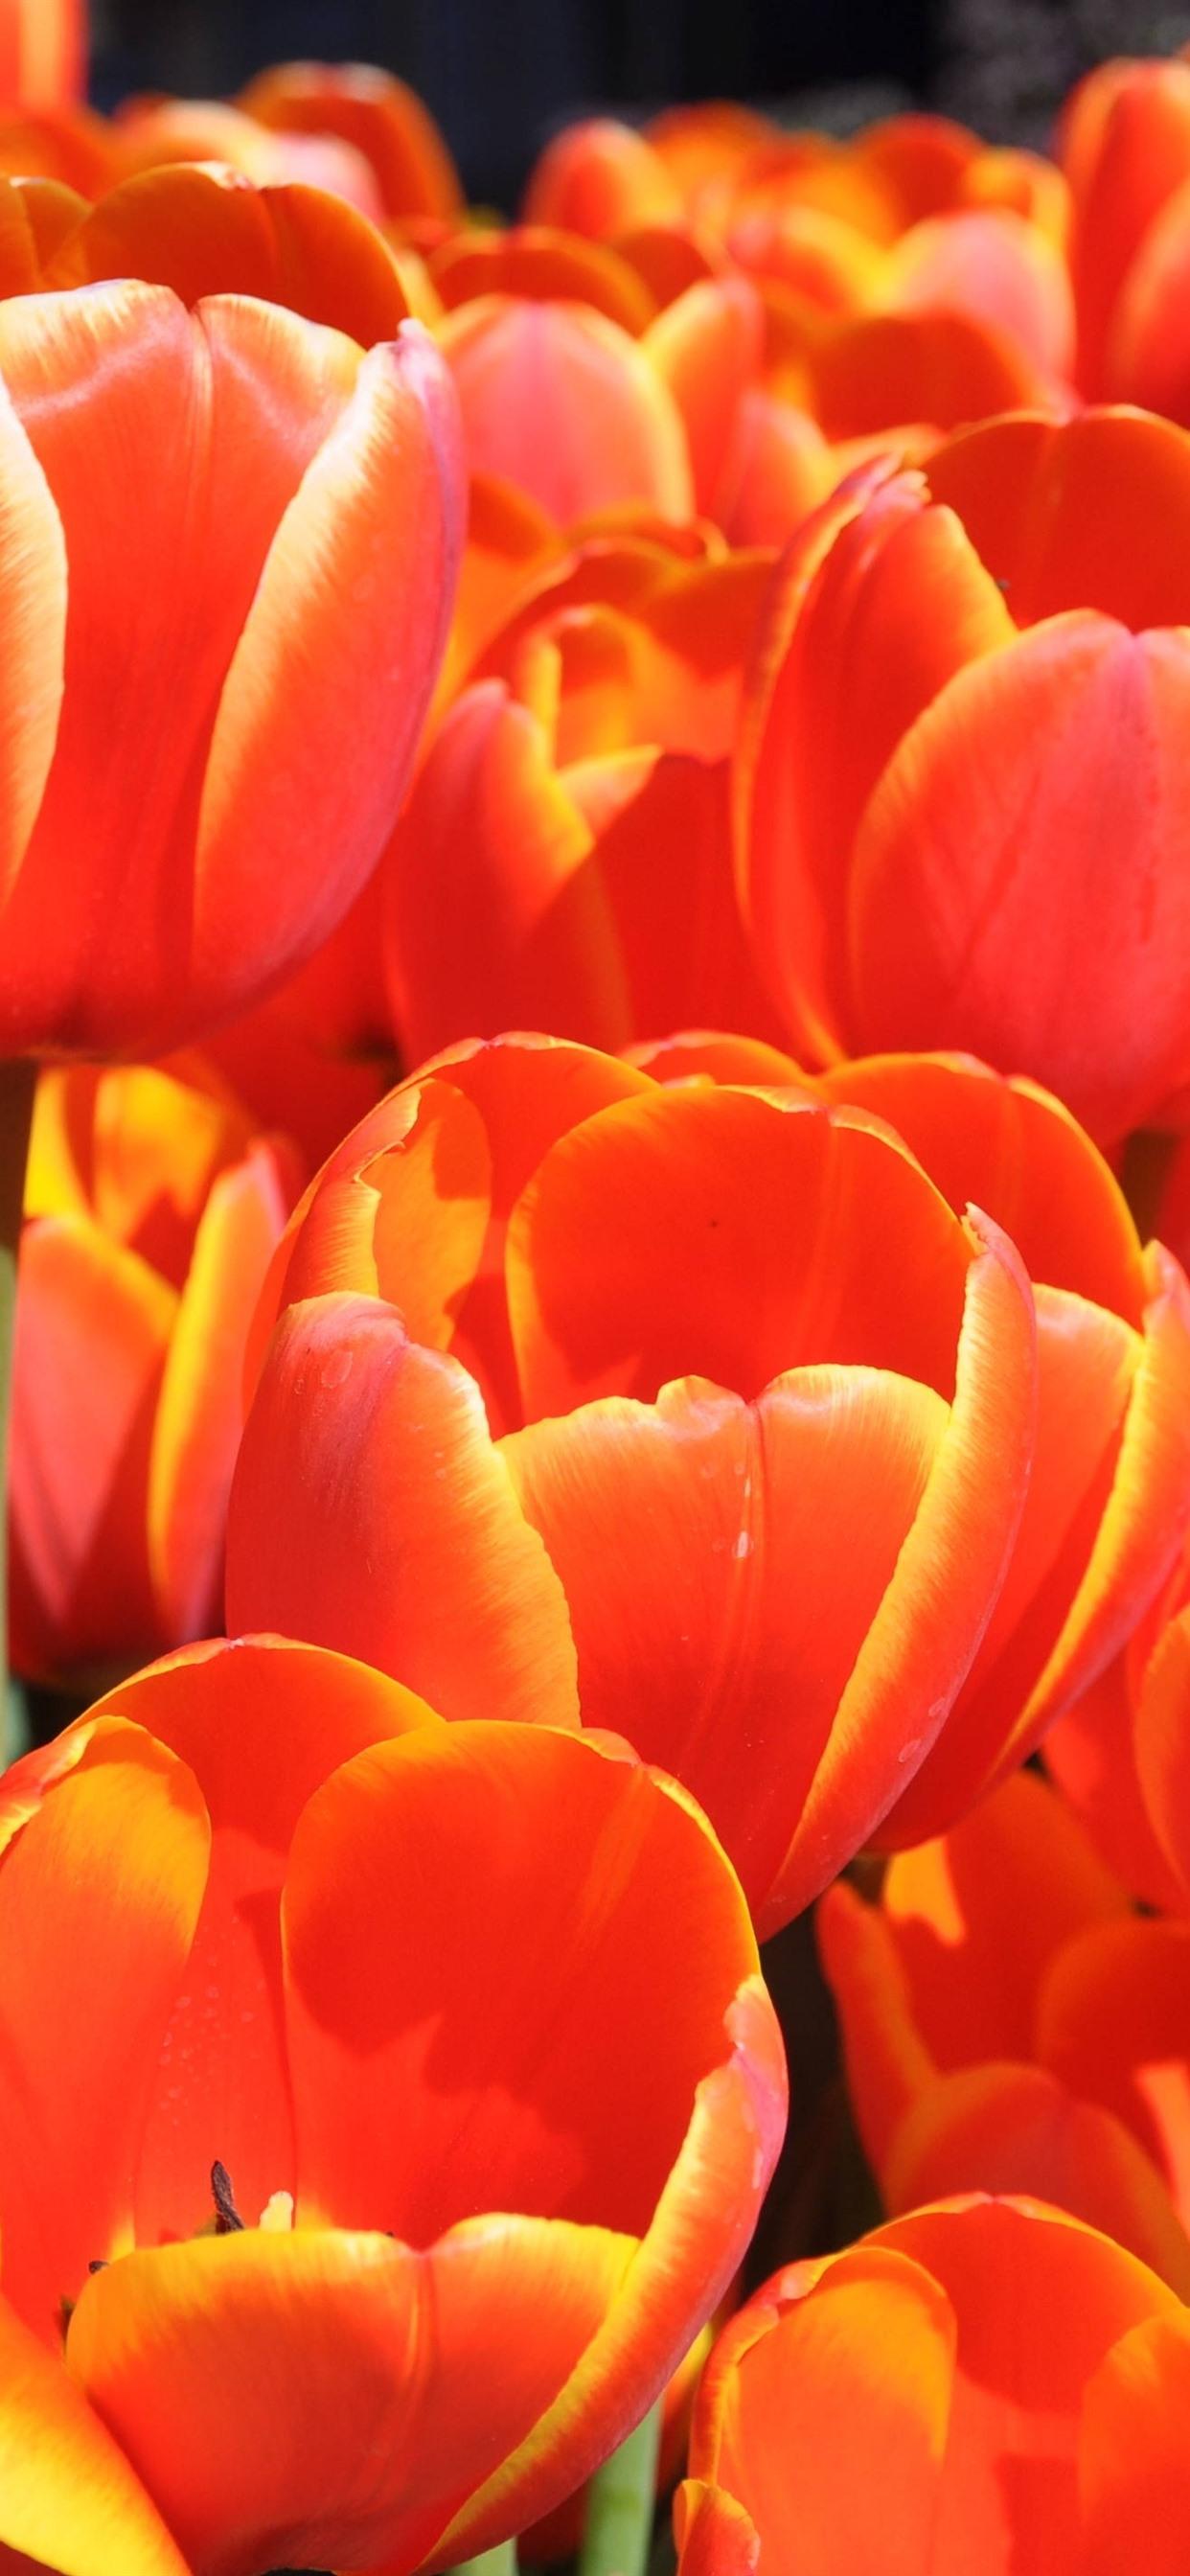 Orange tulips, beautiful flowers 1242x2688 iPhone XS Max wallpaper